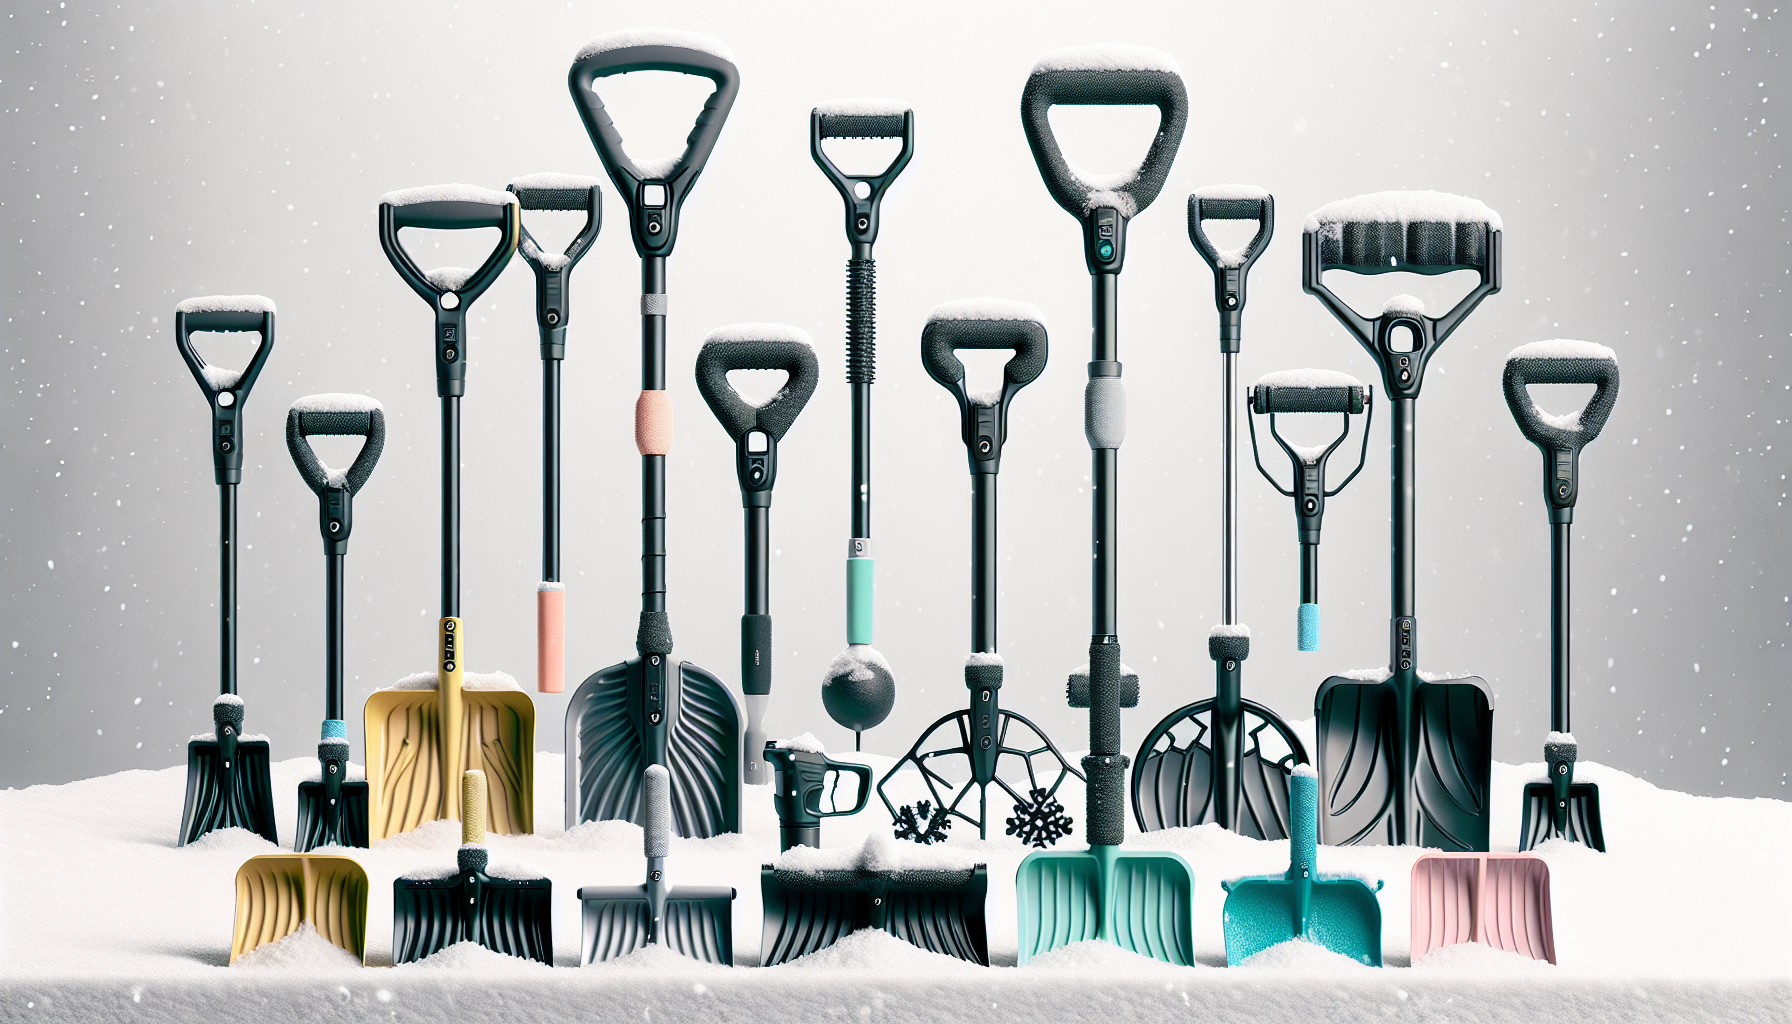 Ergonomic shovel selection